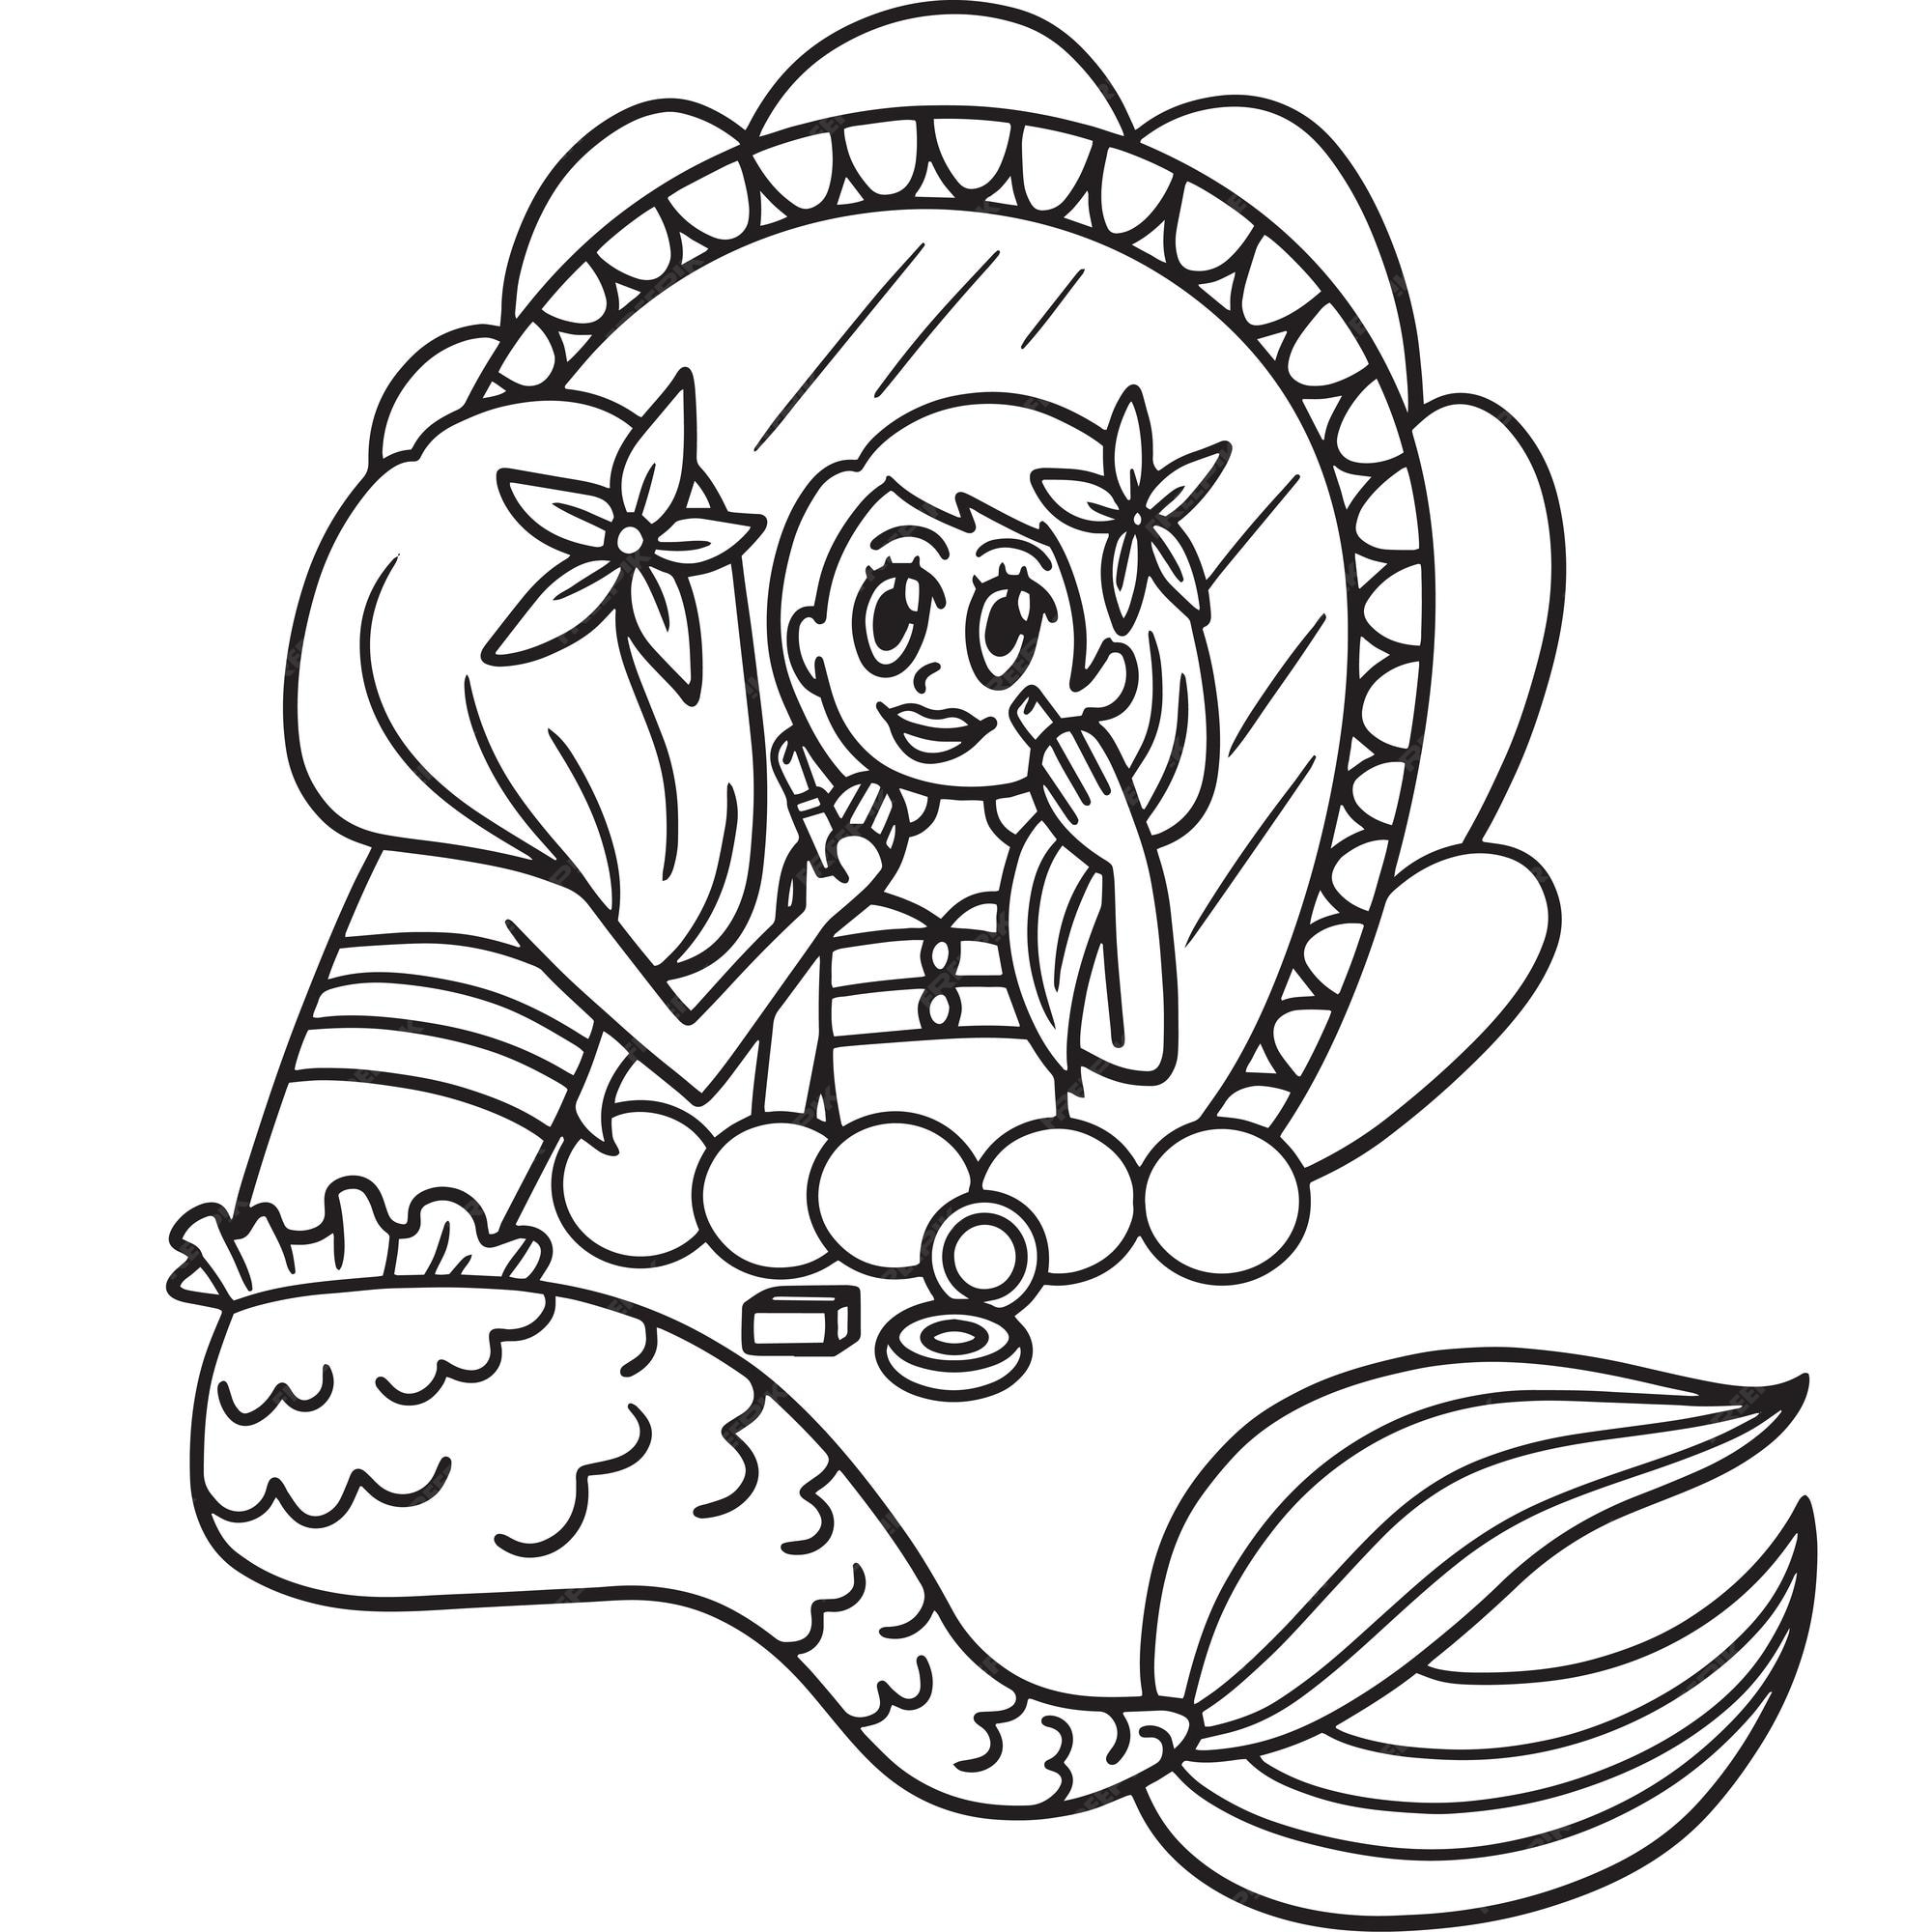 Premium Vector  Mermaid with fish coloring page cartoon illustration